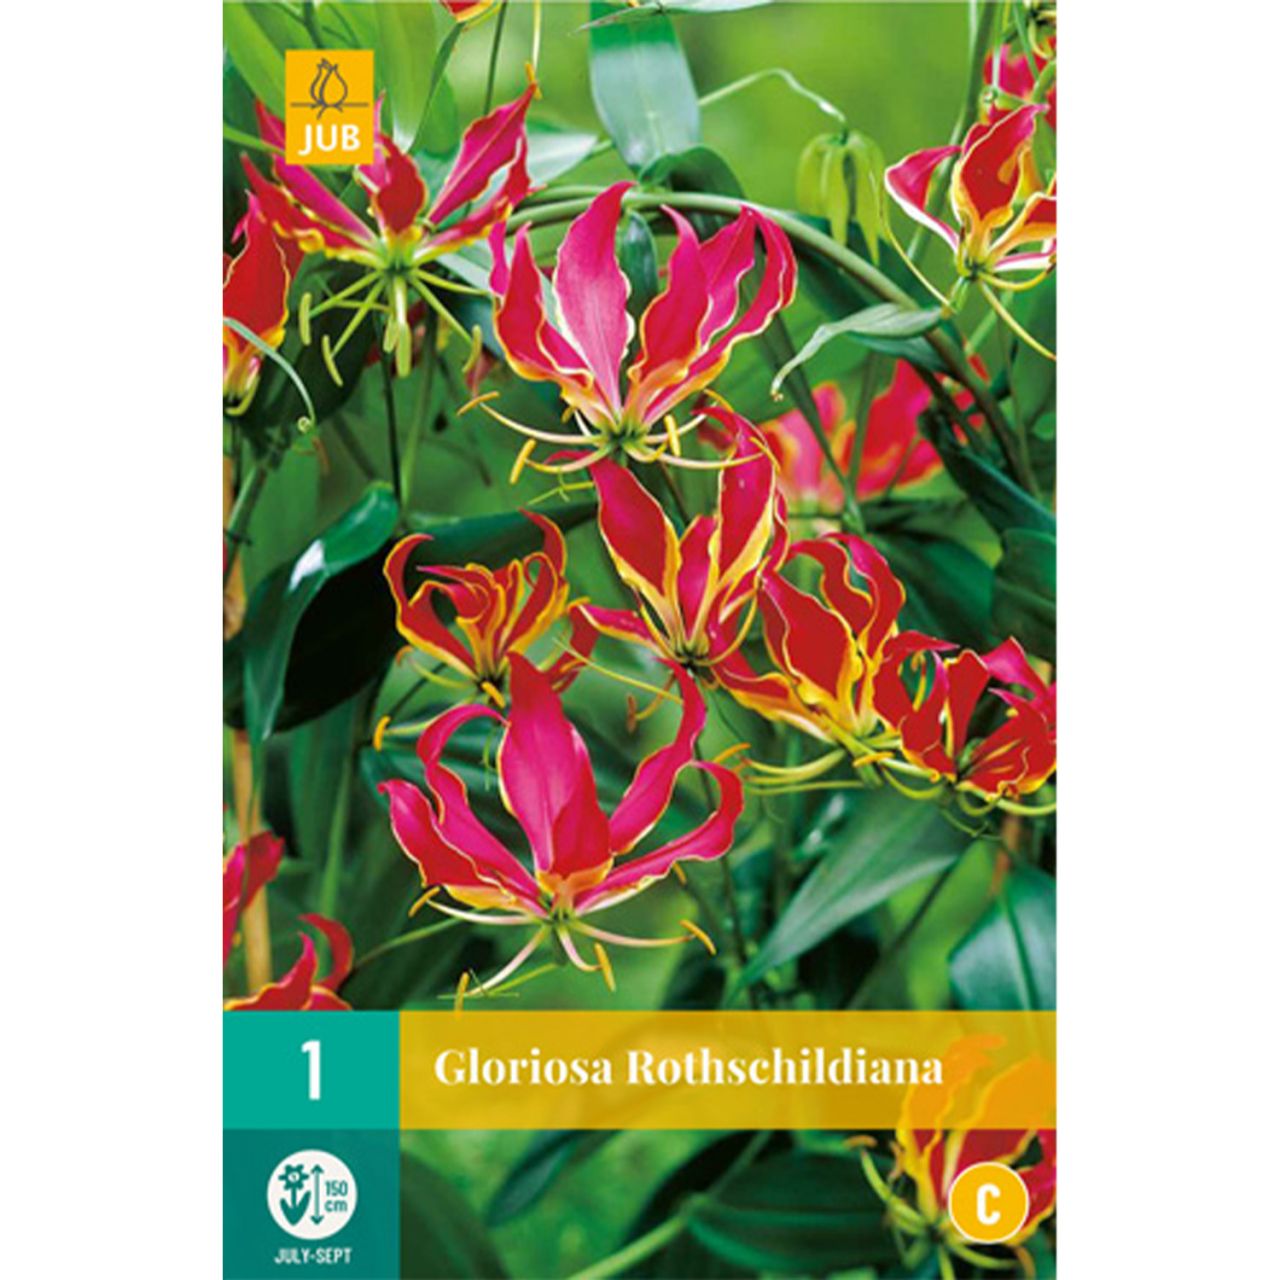 Kategorie <b>Frühlings-Blumenzwiebeln </b> - Ruhmeskrone  -  Kletter-Lilie - 1 Stück - Gloriosa rothschildiana